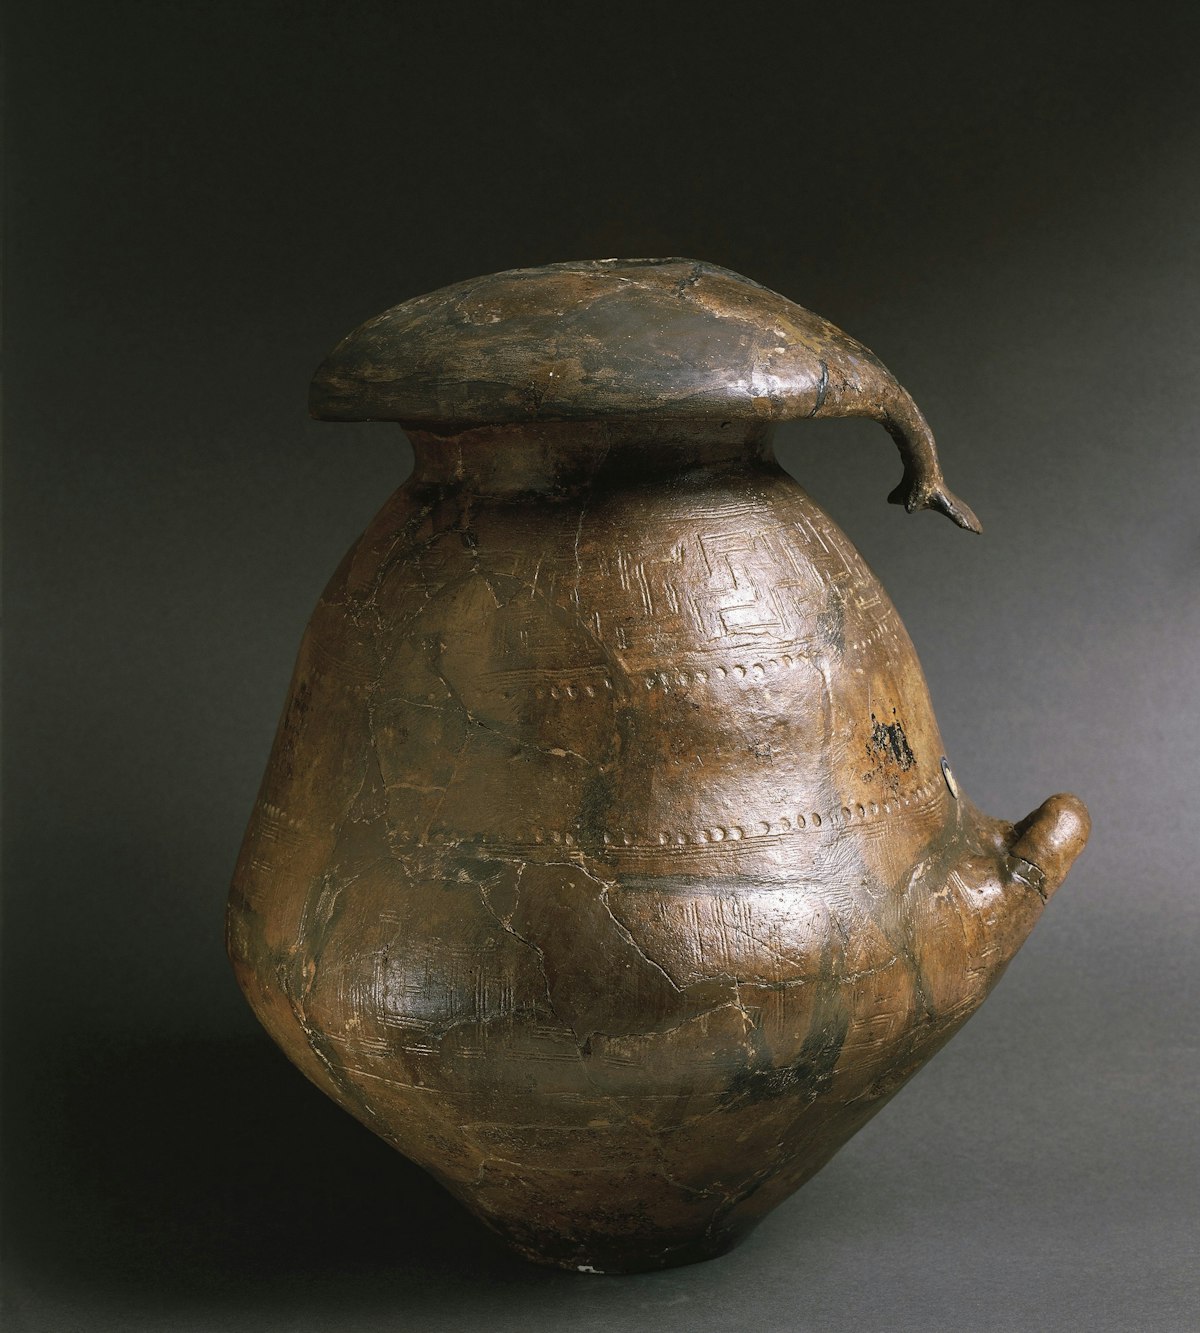 Italy, Emilia Romagna region, Mushroom shaped cinerary urn from San Vitale necropolis